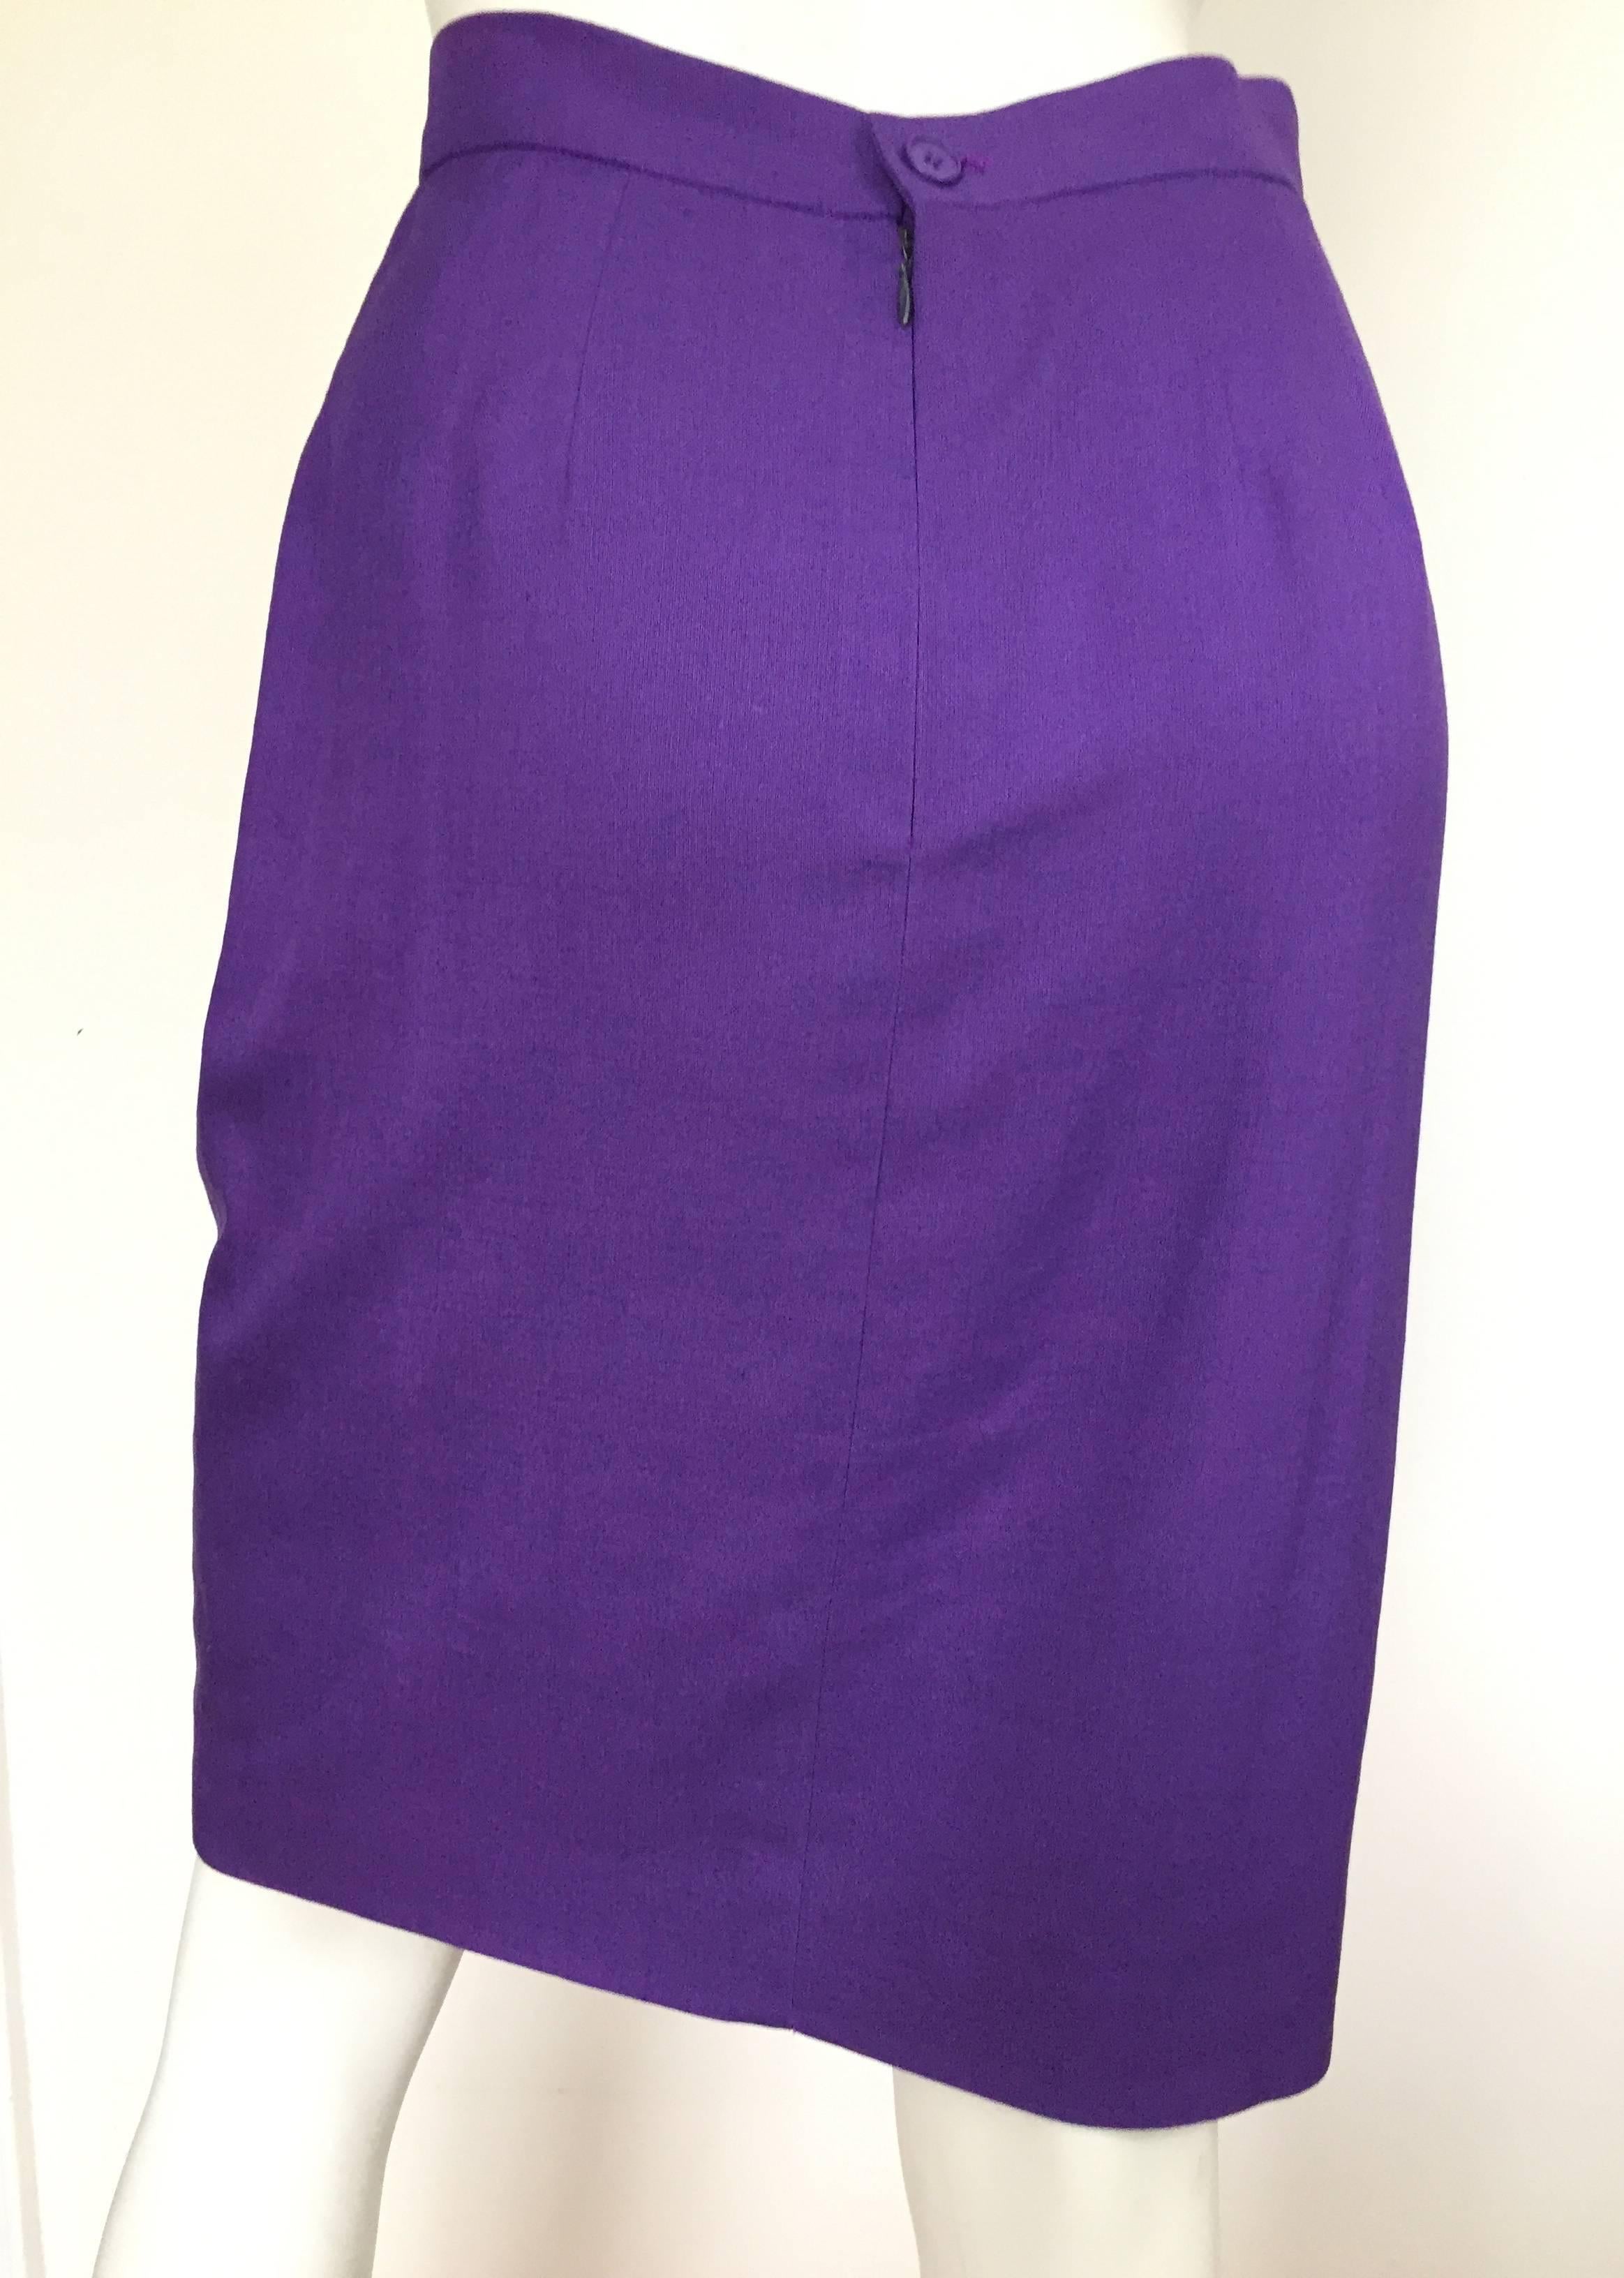 Balenciaga Paris 1980s Violet Skirt Size 4/6. In Good Condition For Sale In Atlanta, GA